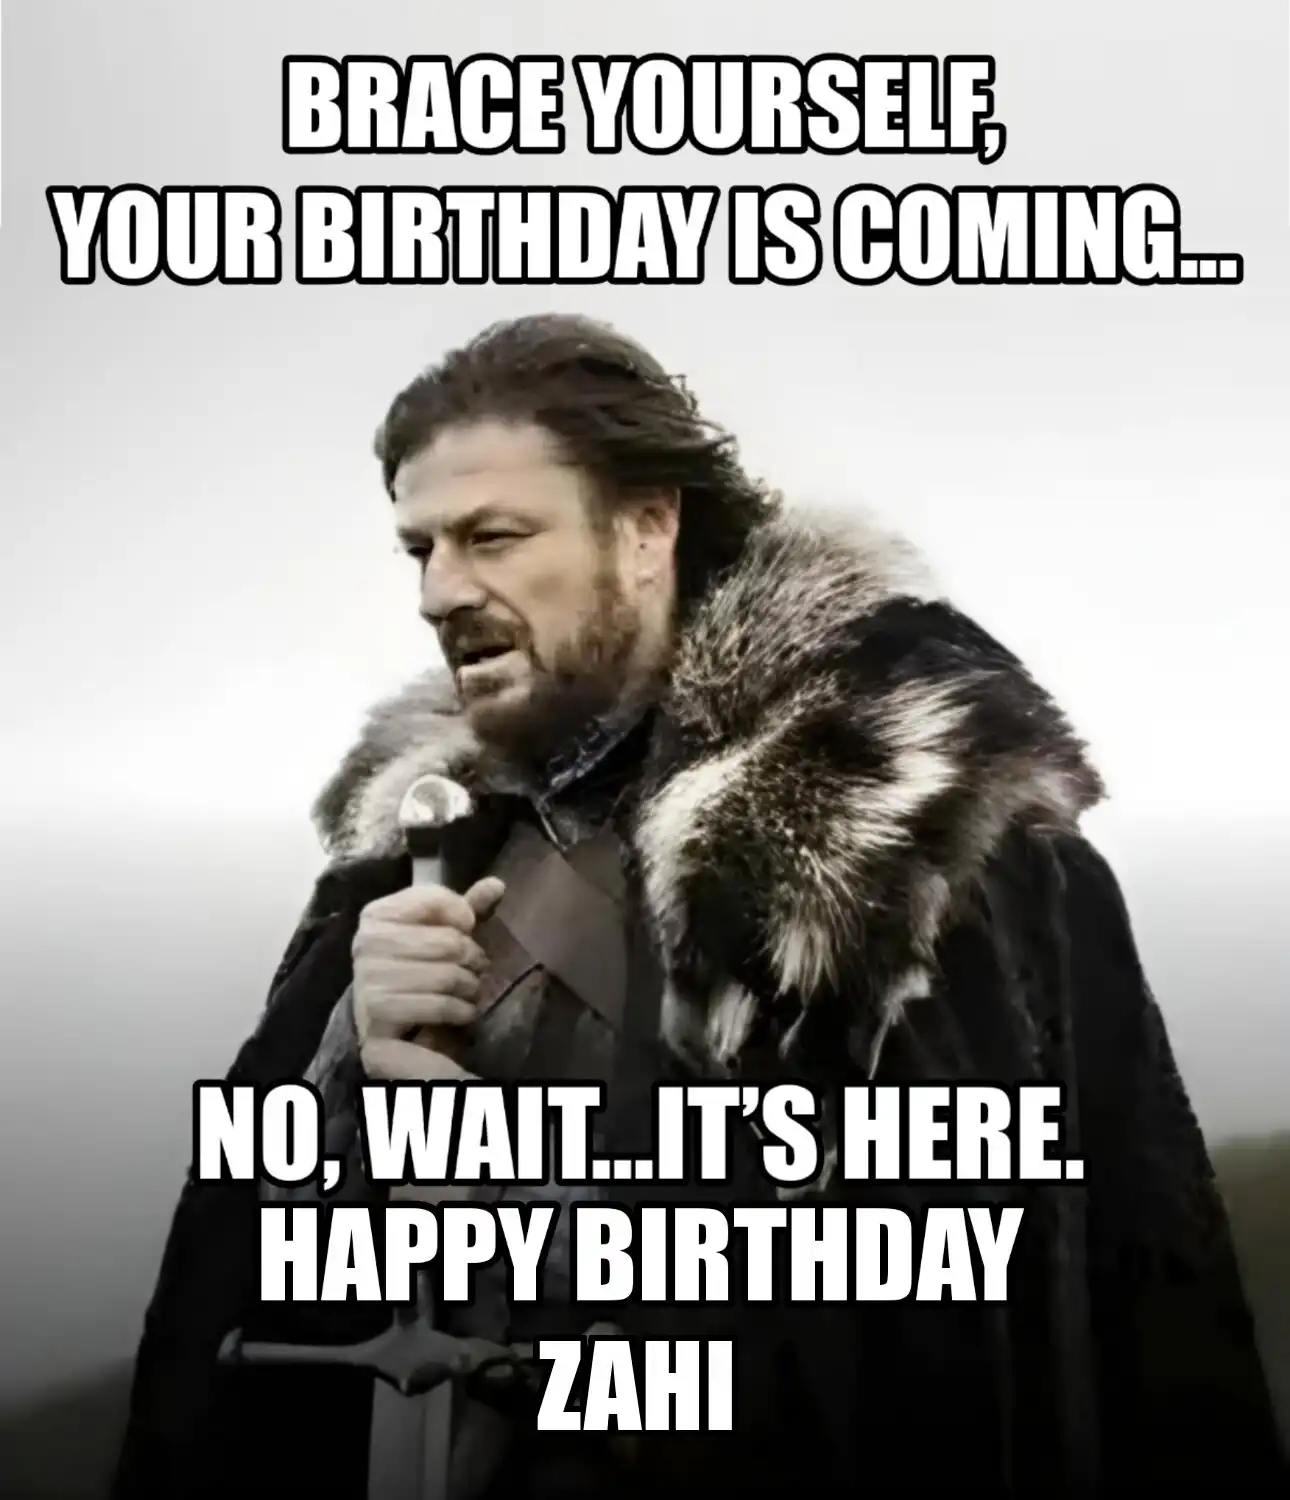 Happy Birthday Zahi Brace Yourself Your Birthday Is Coming Meme